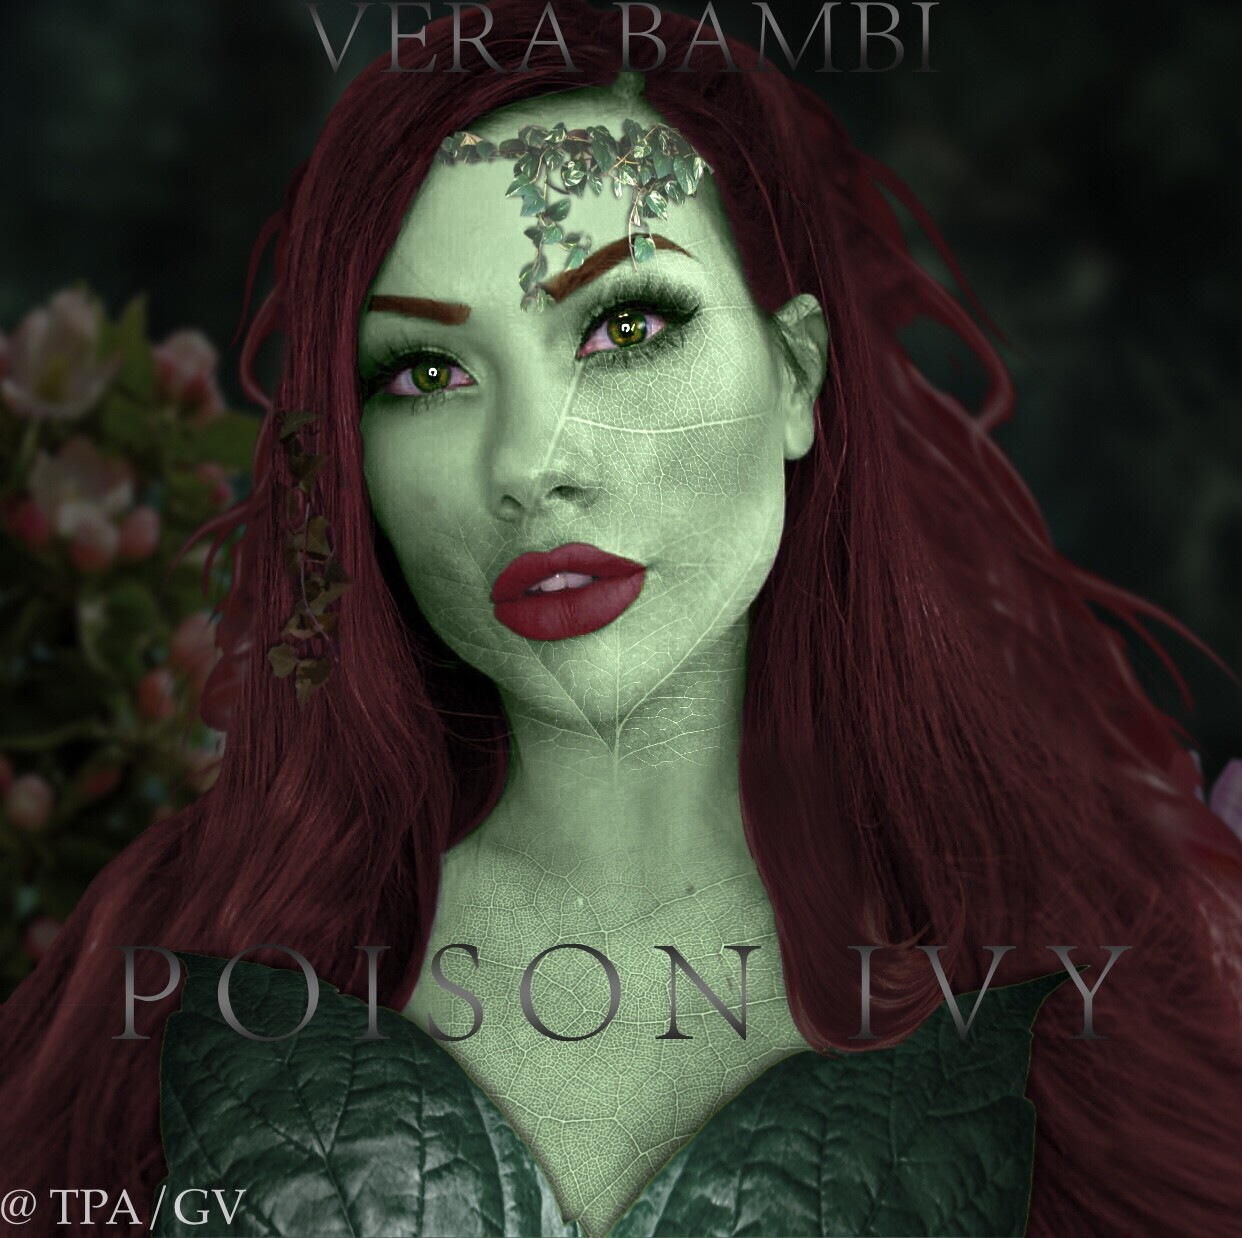 ArtStation - Vera Bambi as Poison Ivy, Green Voltage